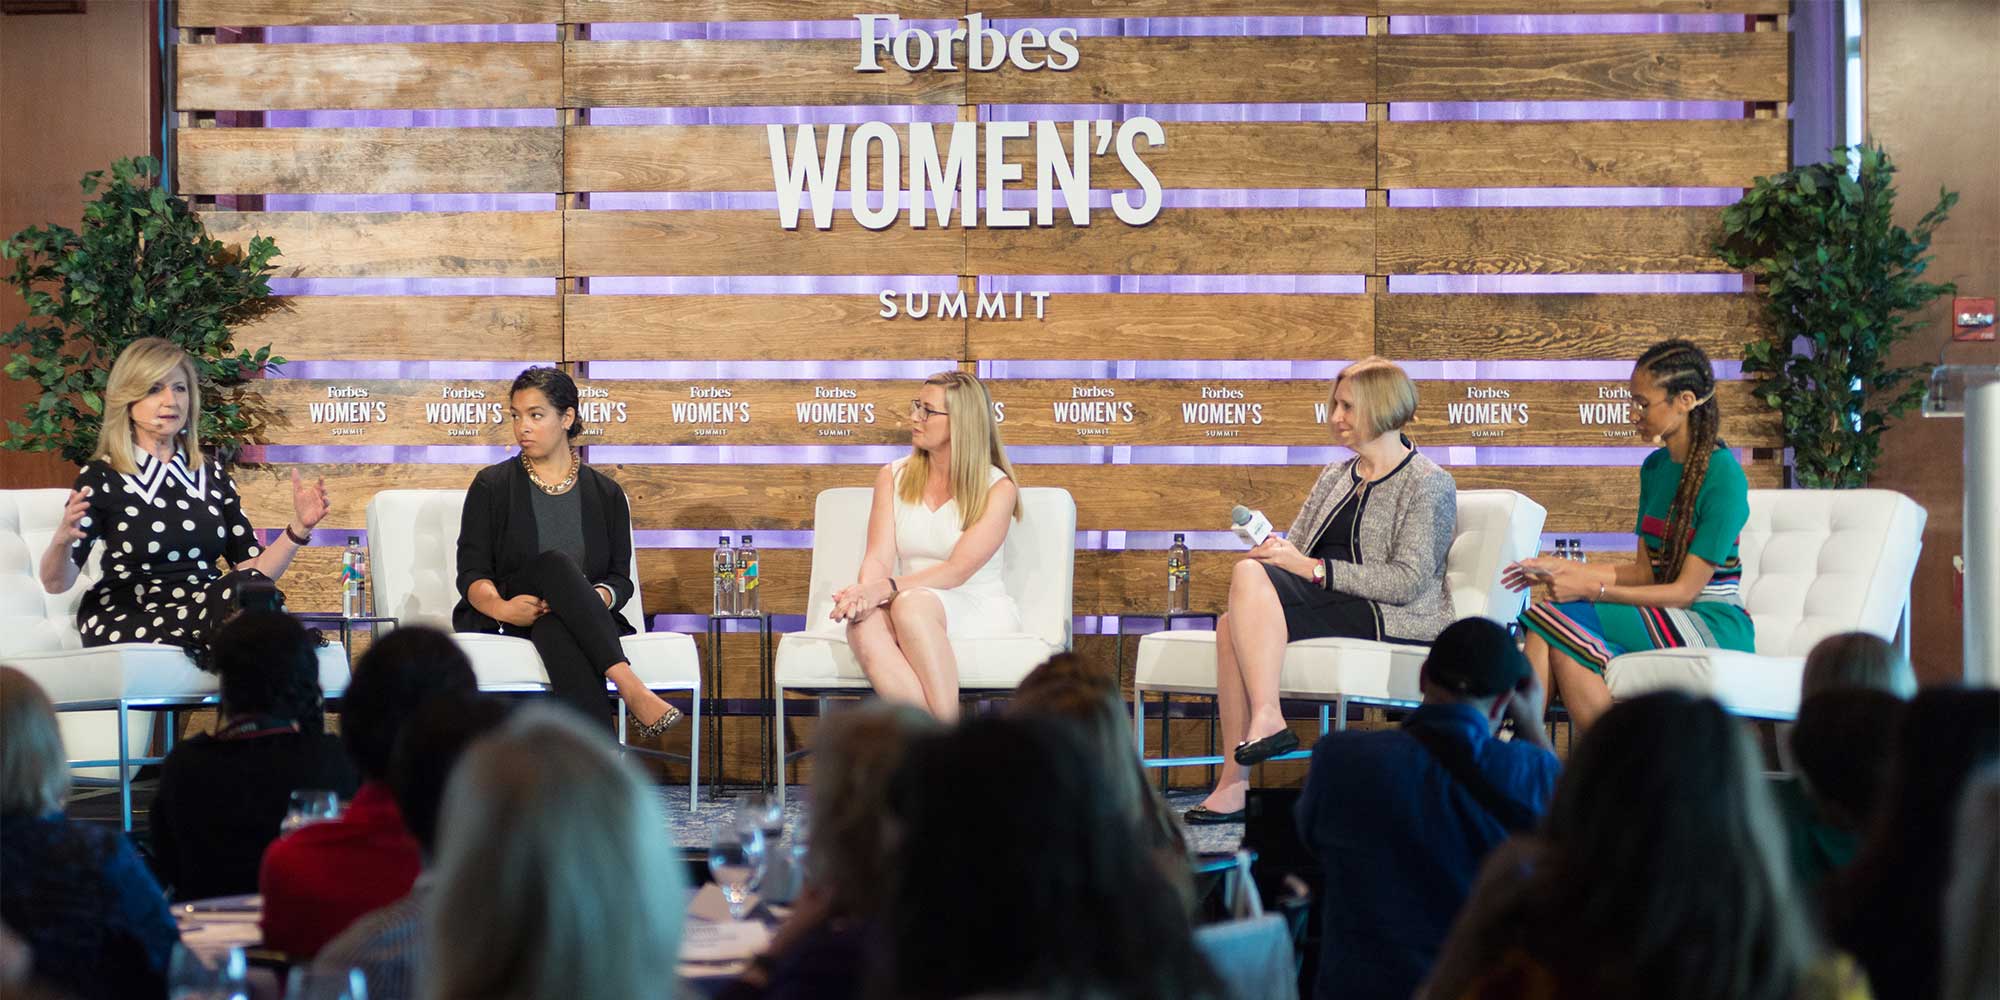 Forbes Women's Summit panel